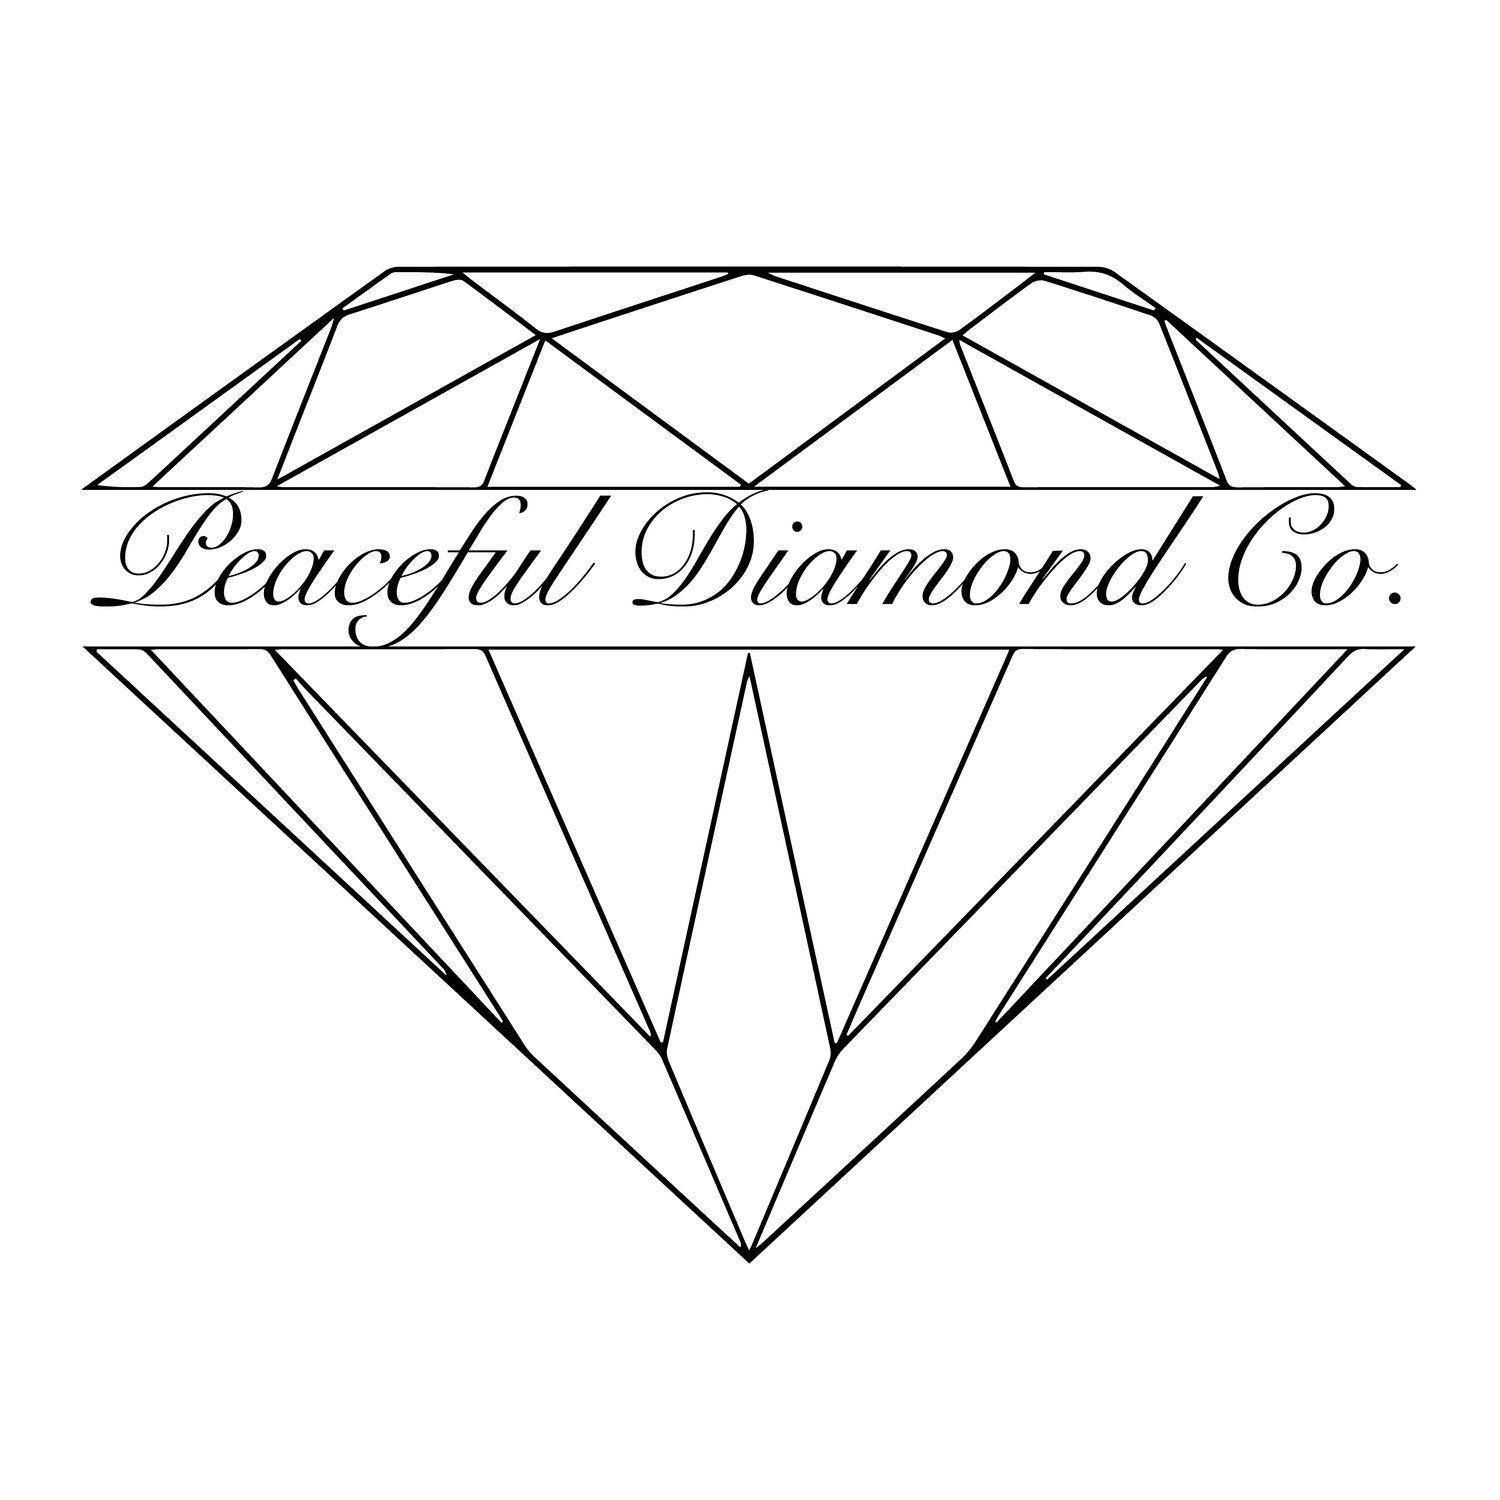 Dimond Co Logo - Peaceful Diamond Company